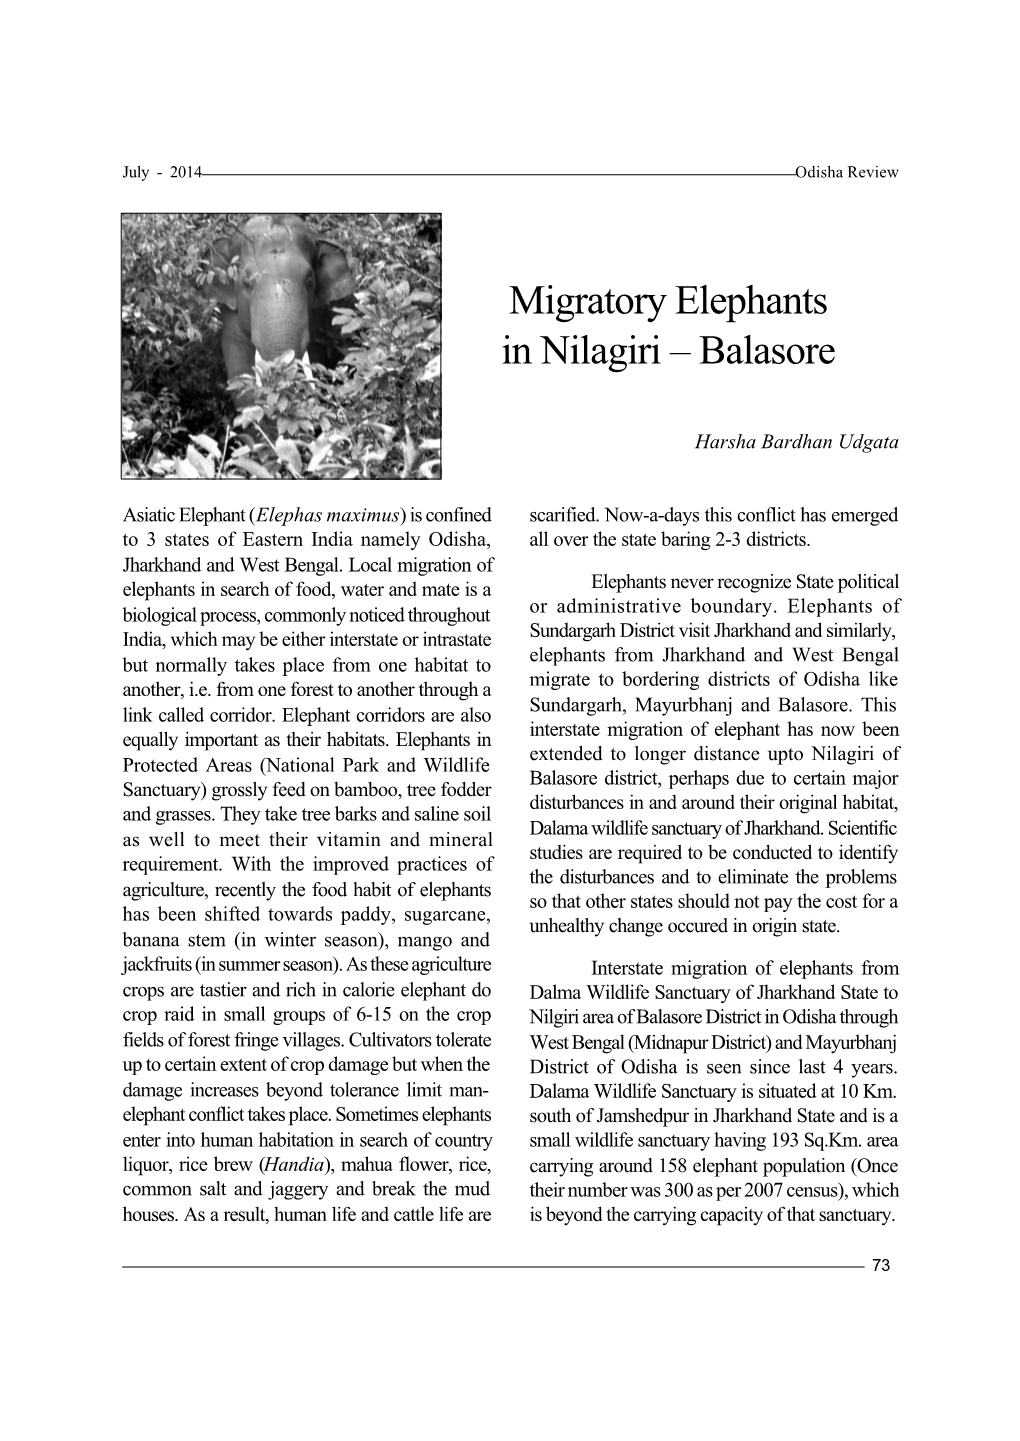 Migratory Elephants in Nilagiri – Balasore